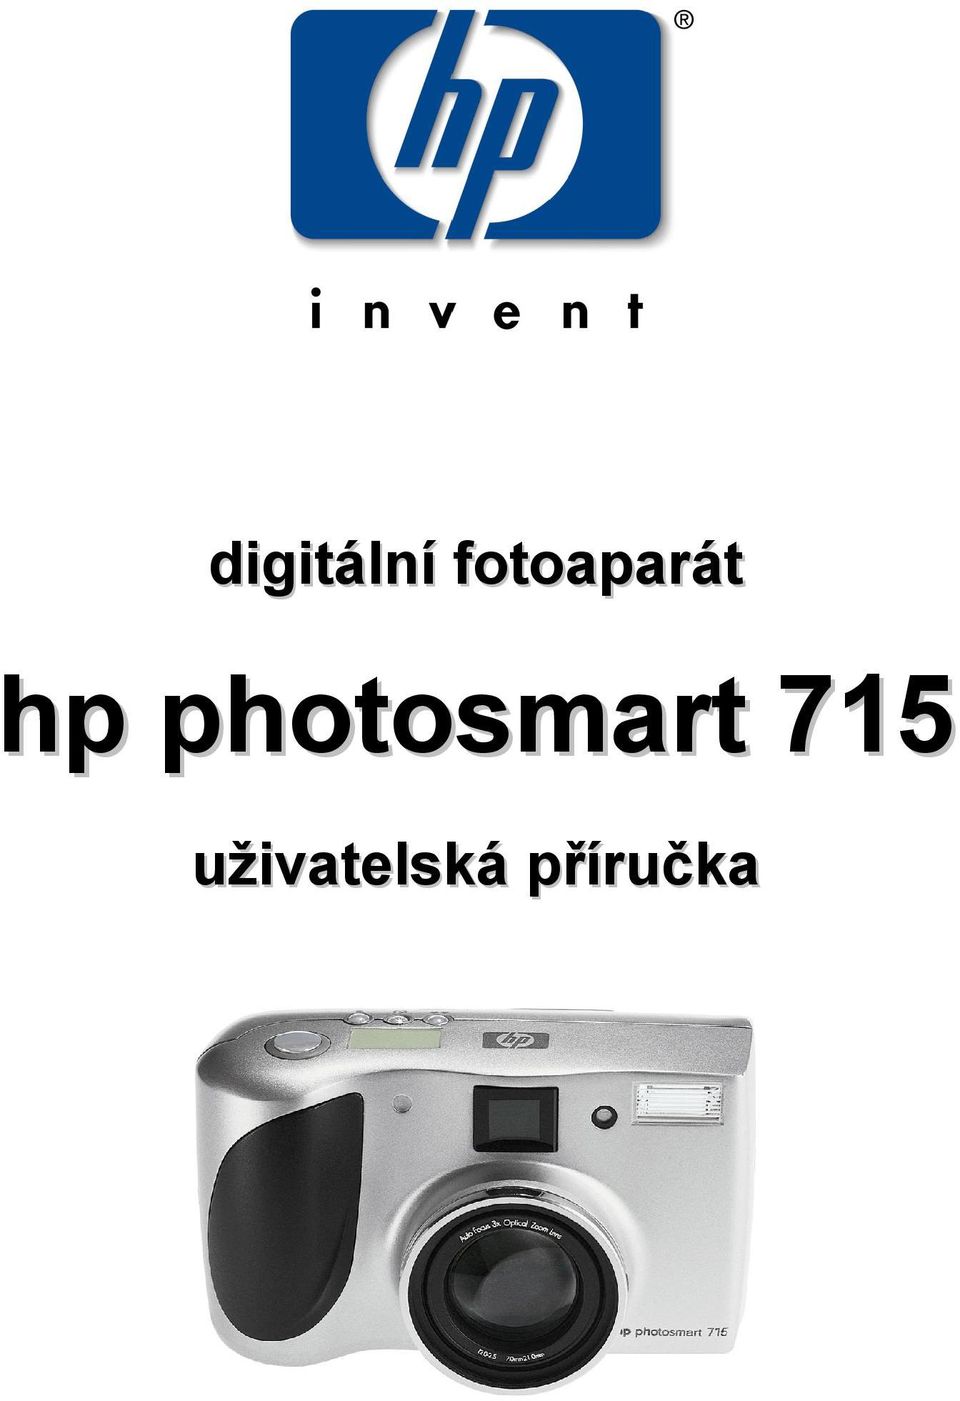 photosmart 715